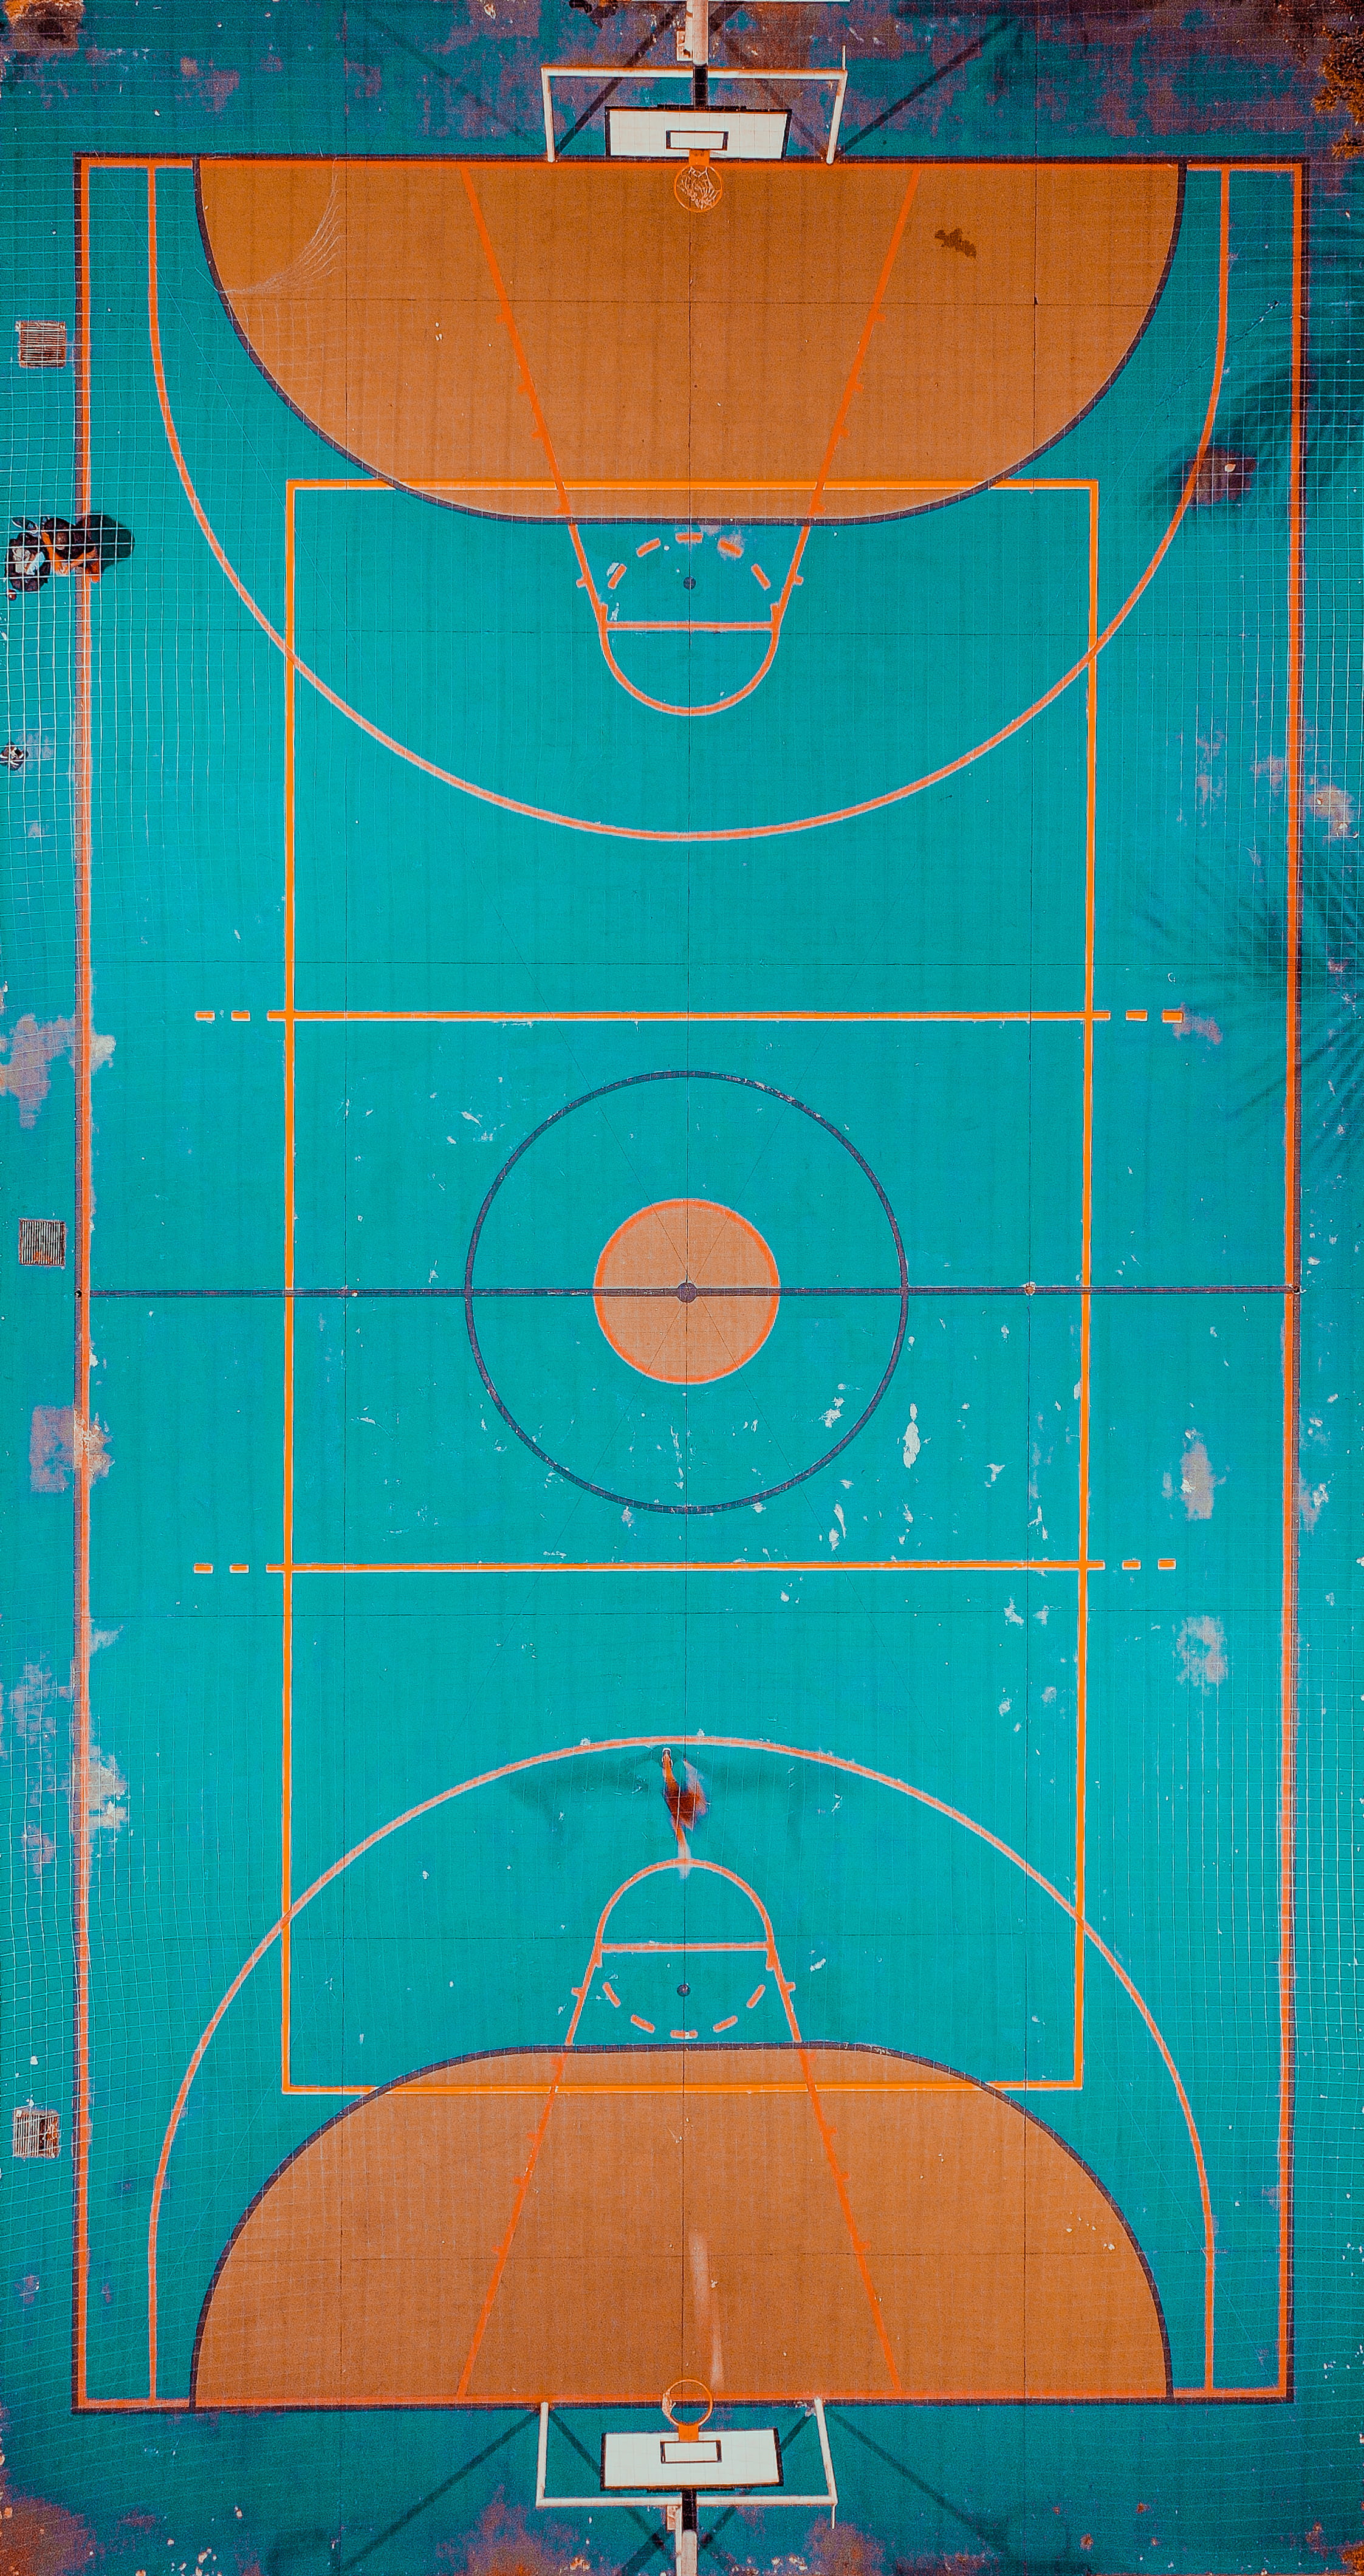 sport, basketball - sport, no people, geometric shape, circle